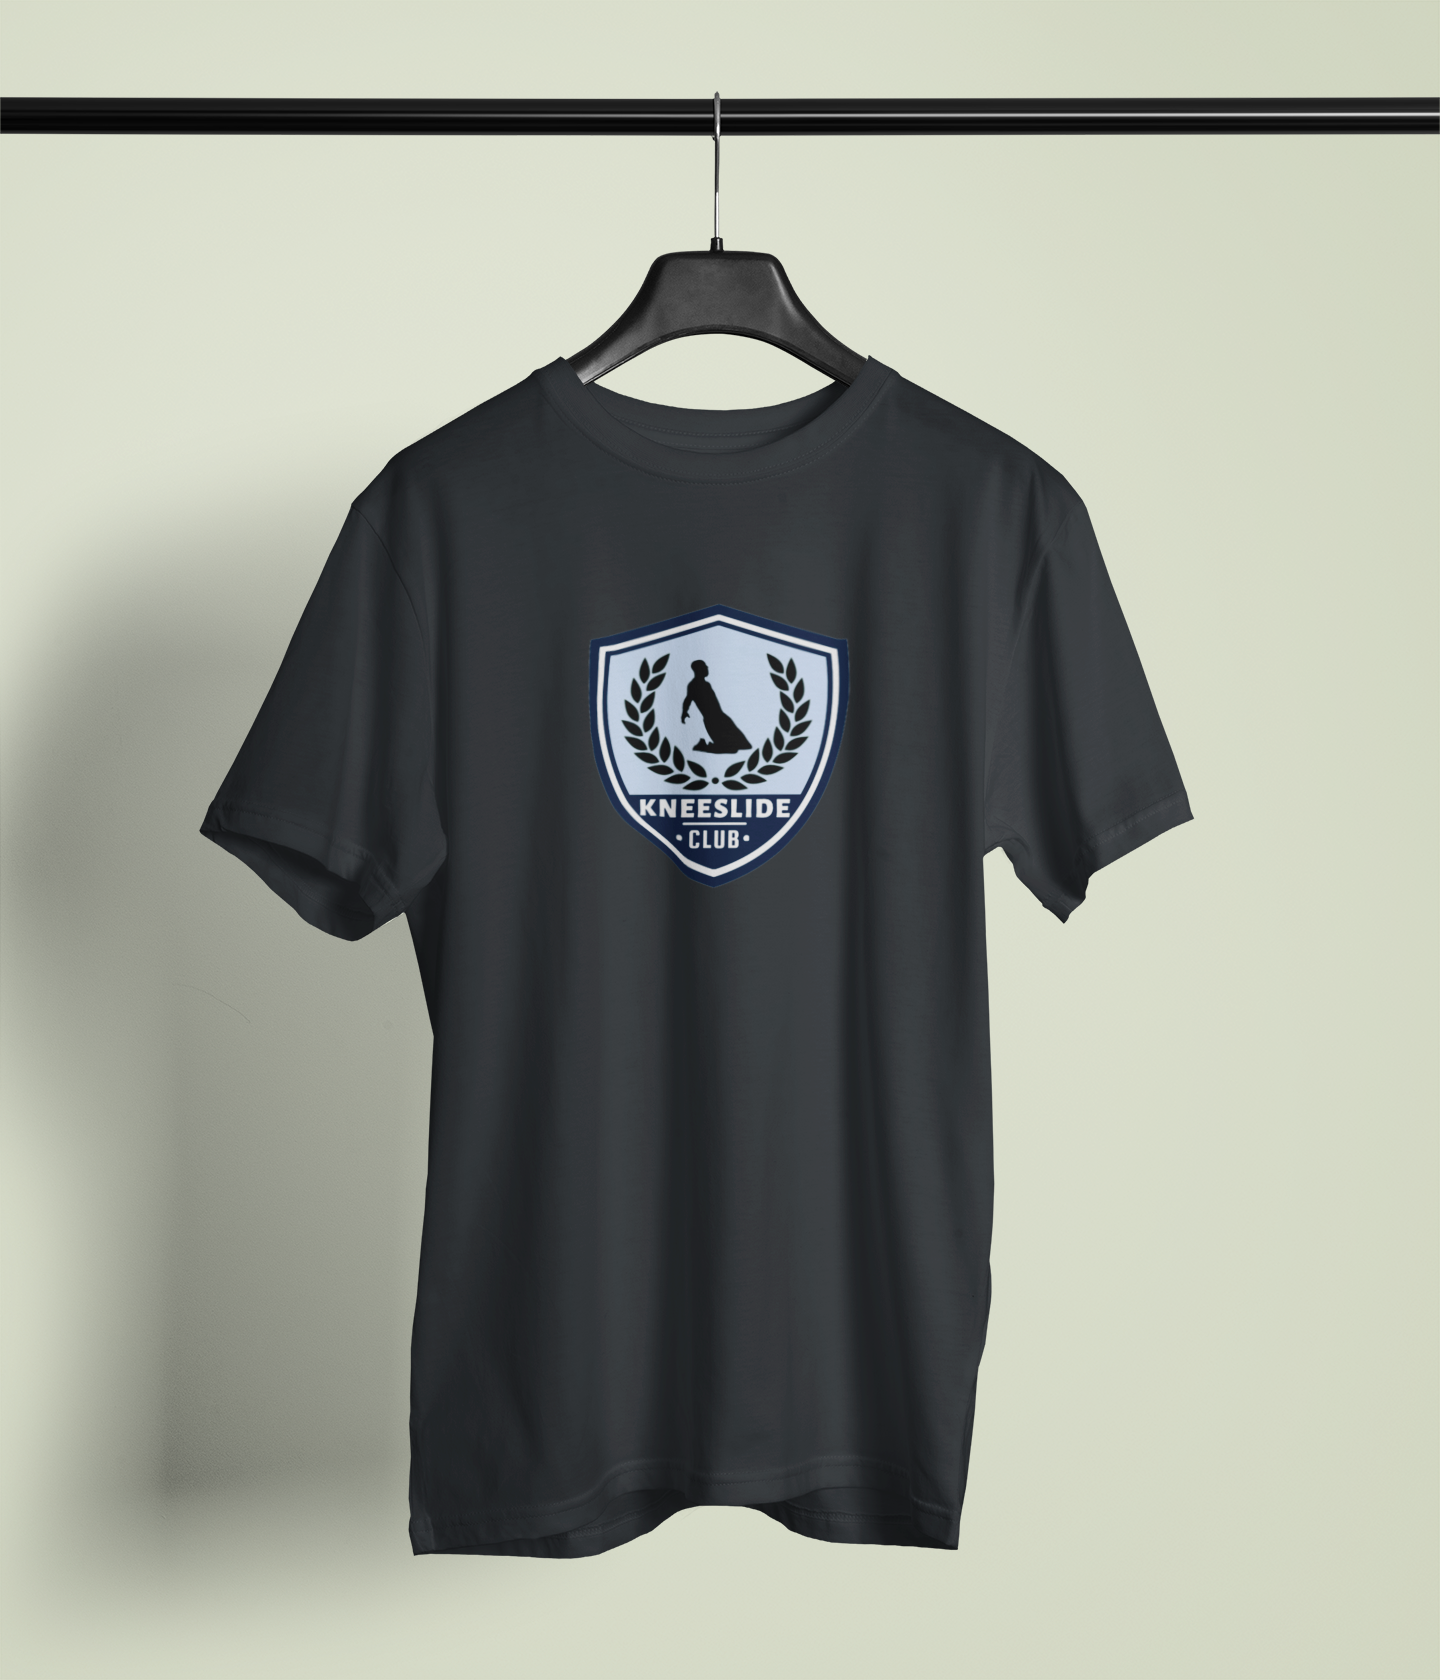 Kneeslide Club crest T-shirt